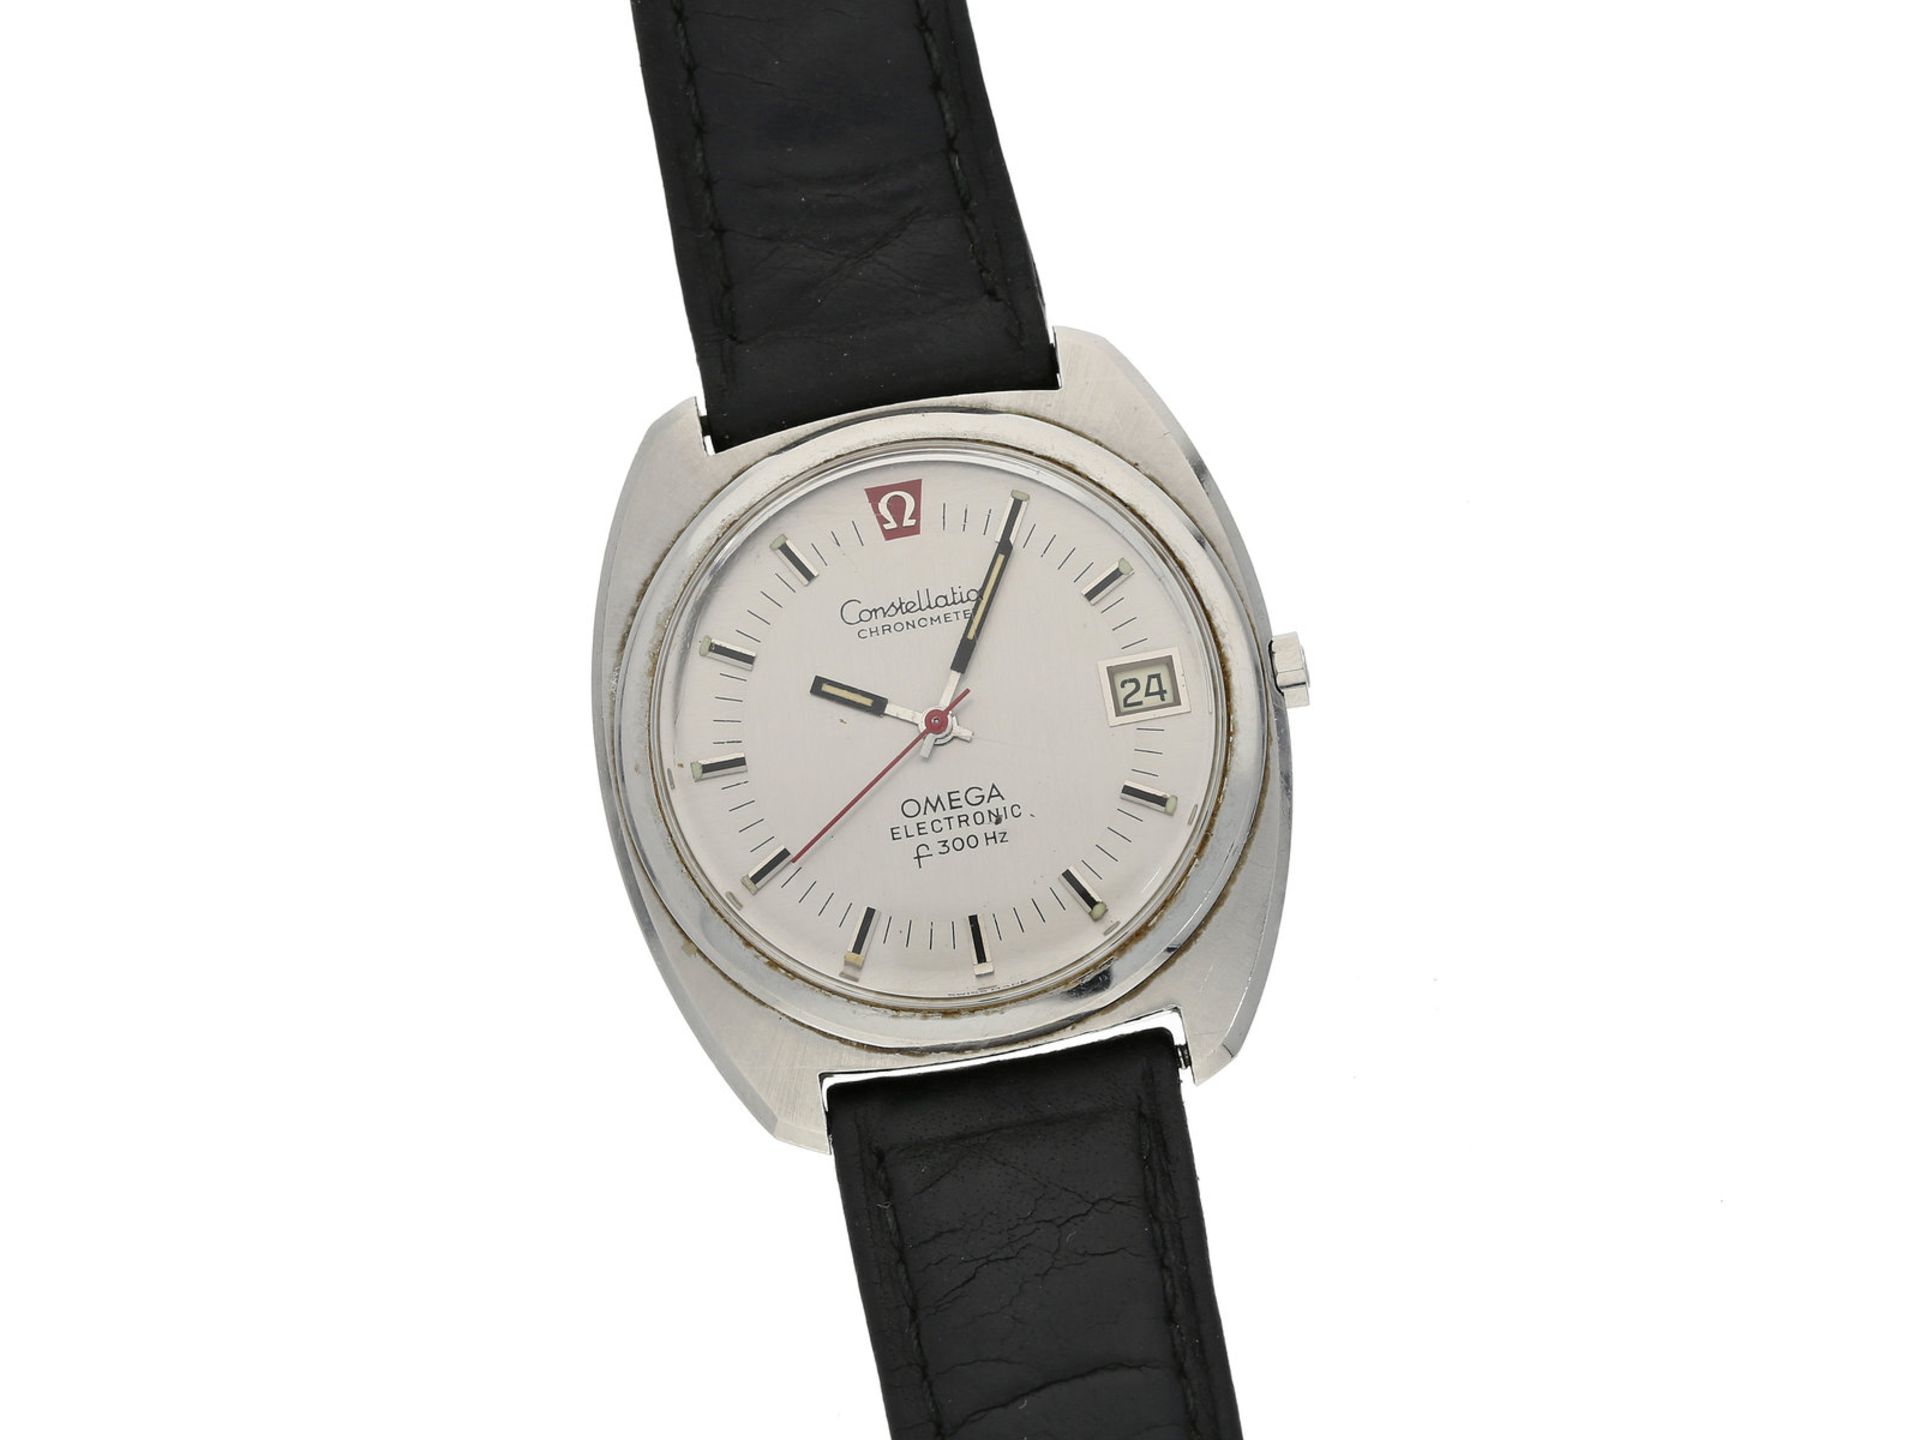 Armbanduhr: vintage Omega Constellation Electronic, zertifiziertes Chronometer mit Stahlgehäuse